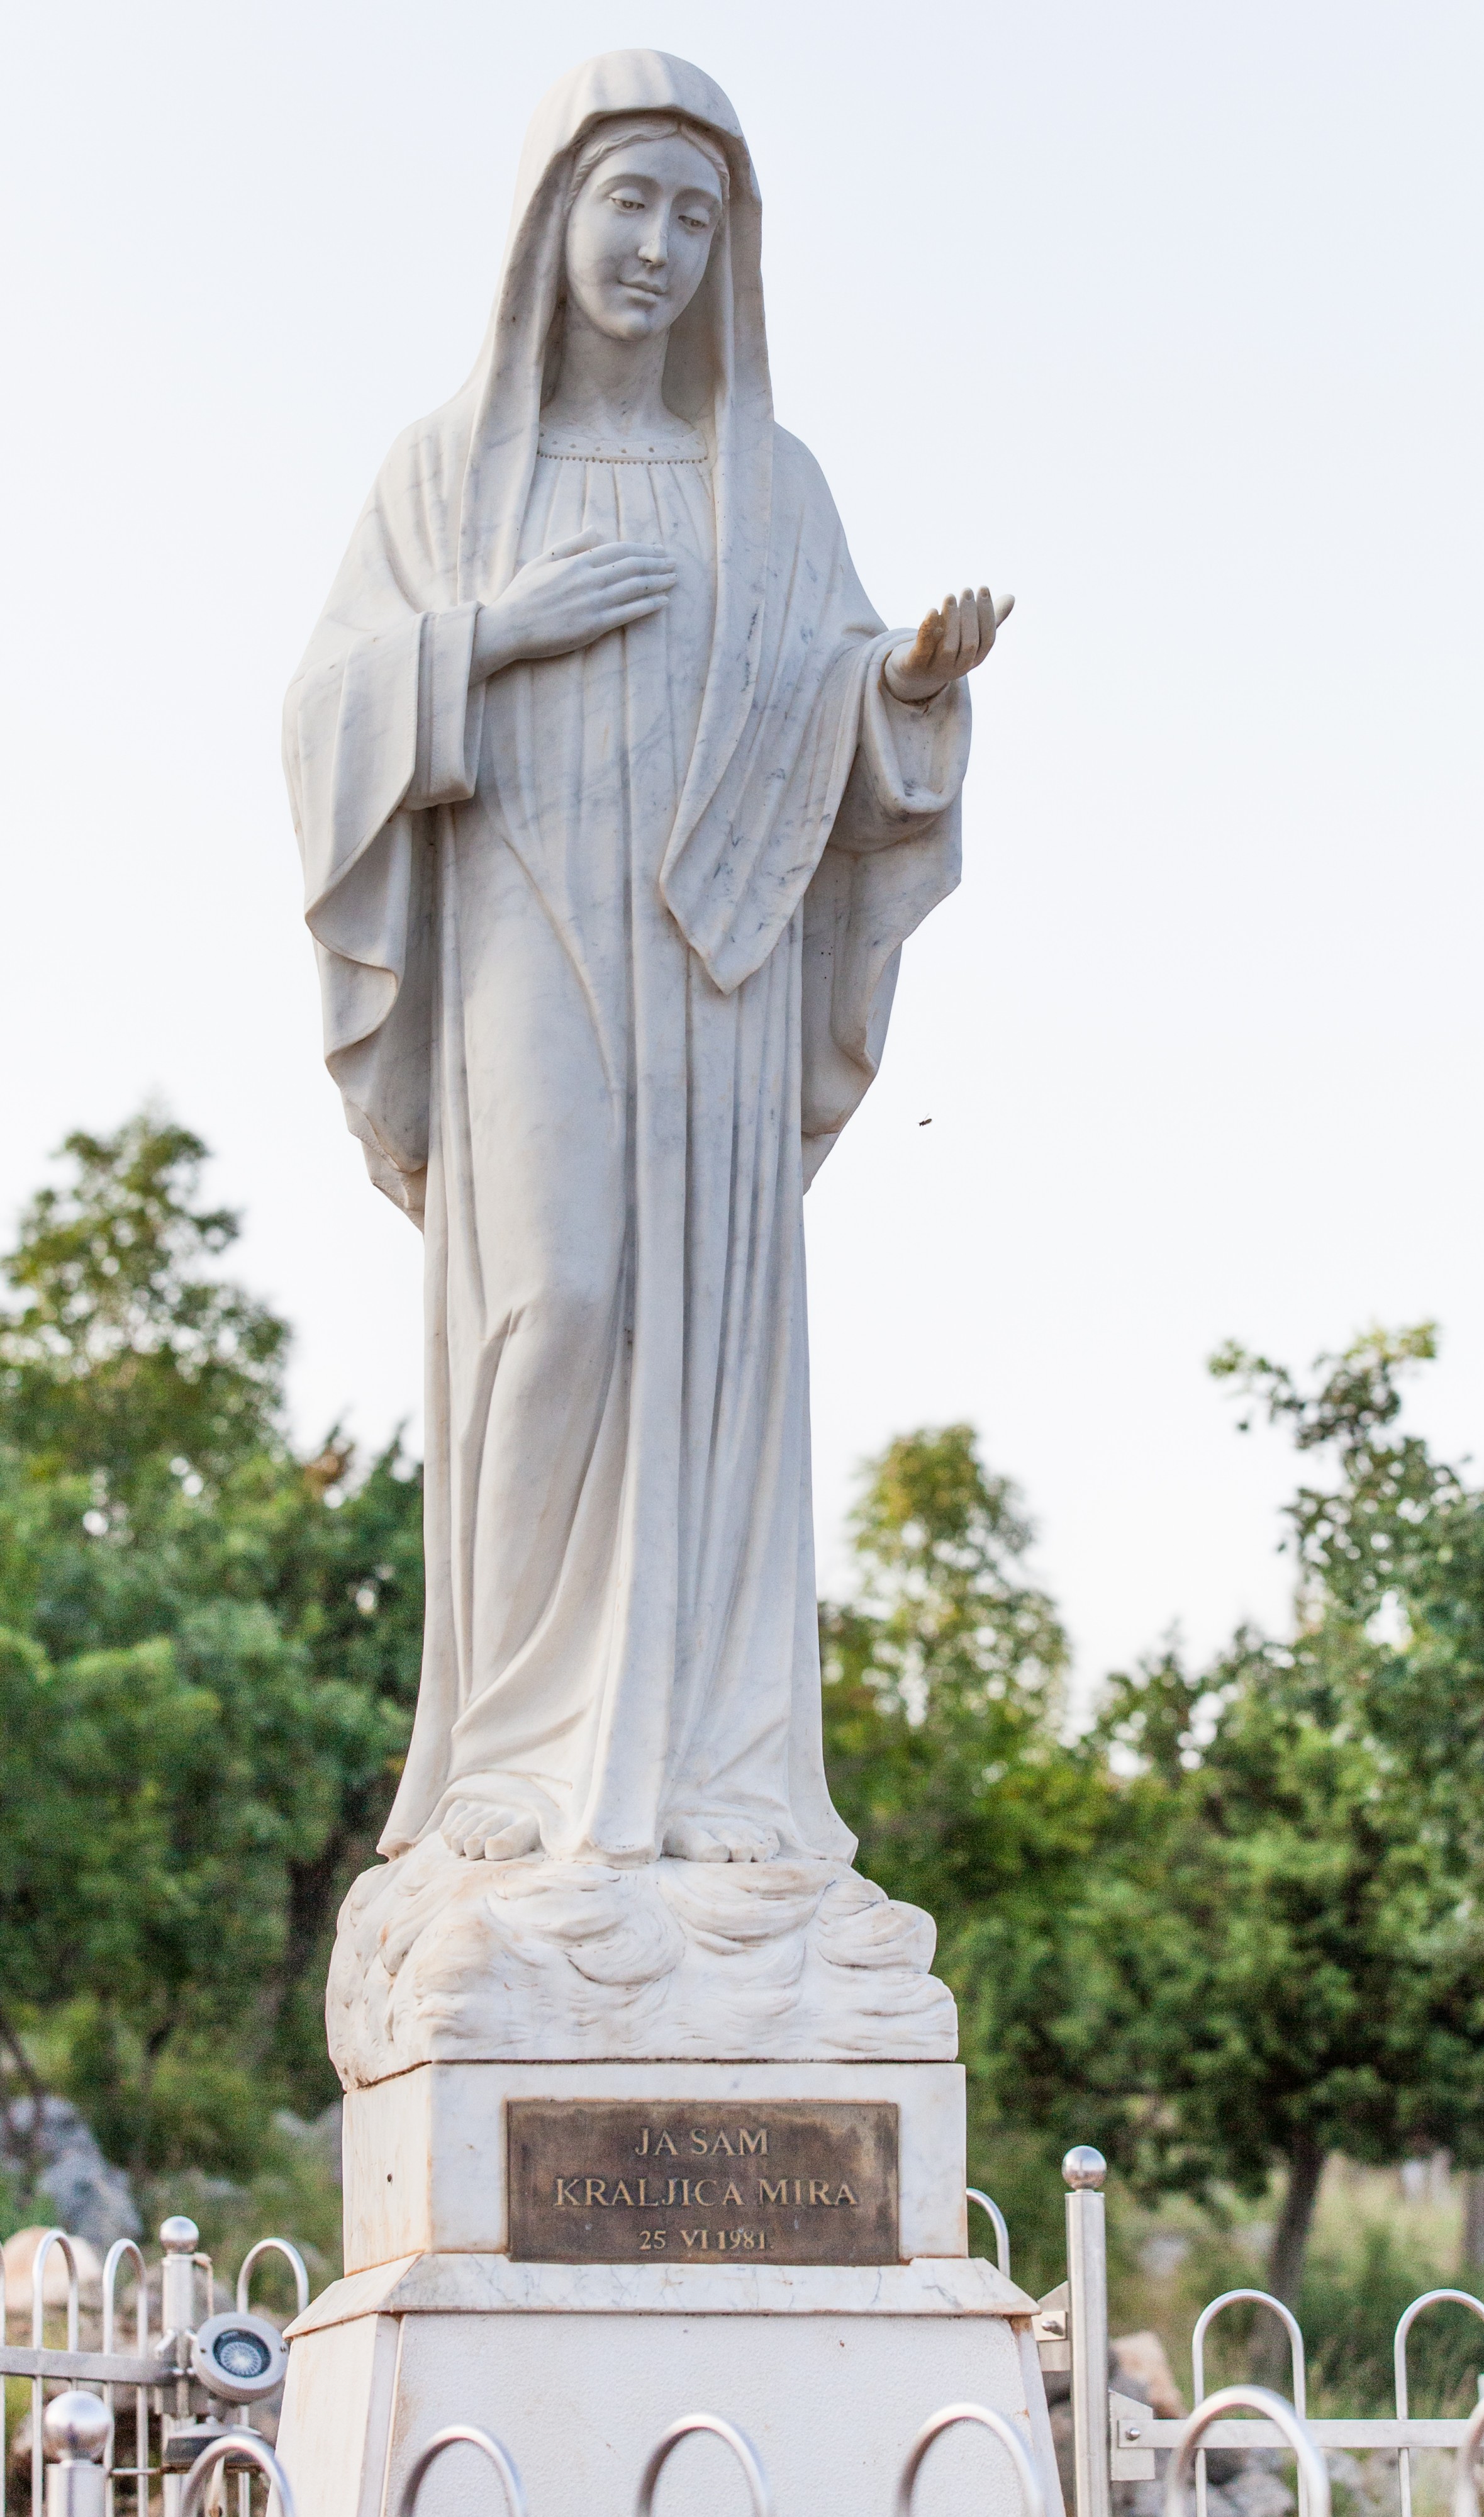 Virgin Mary statue in Medjugorje, Bosnia, July 2014, picture 7